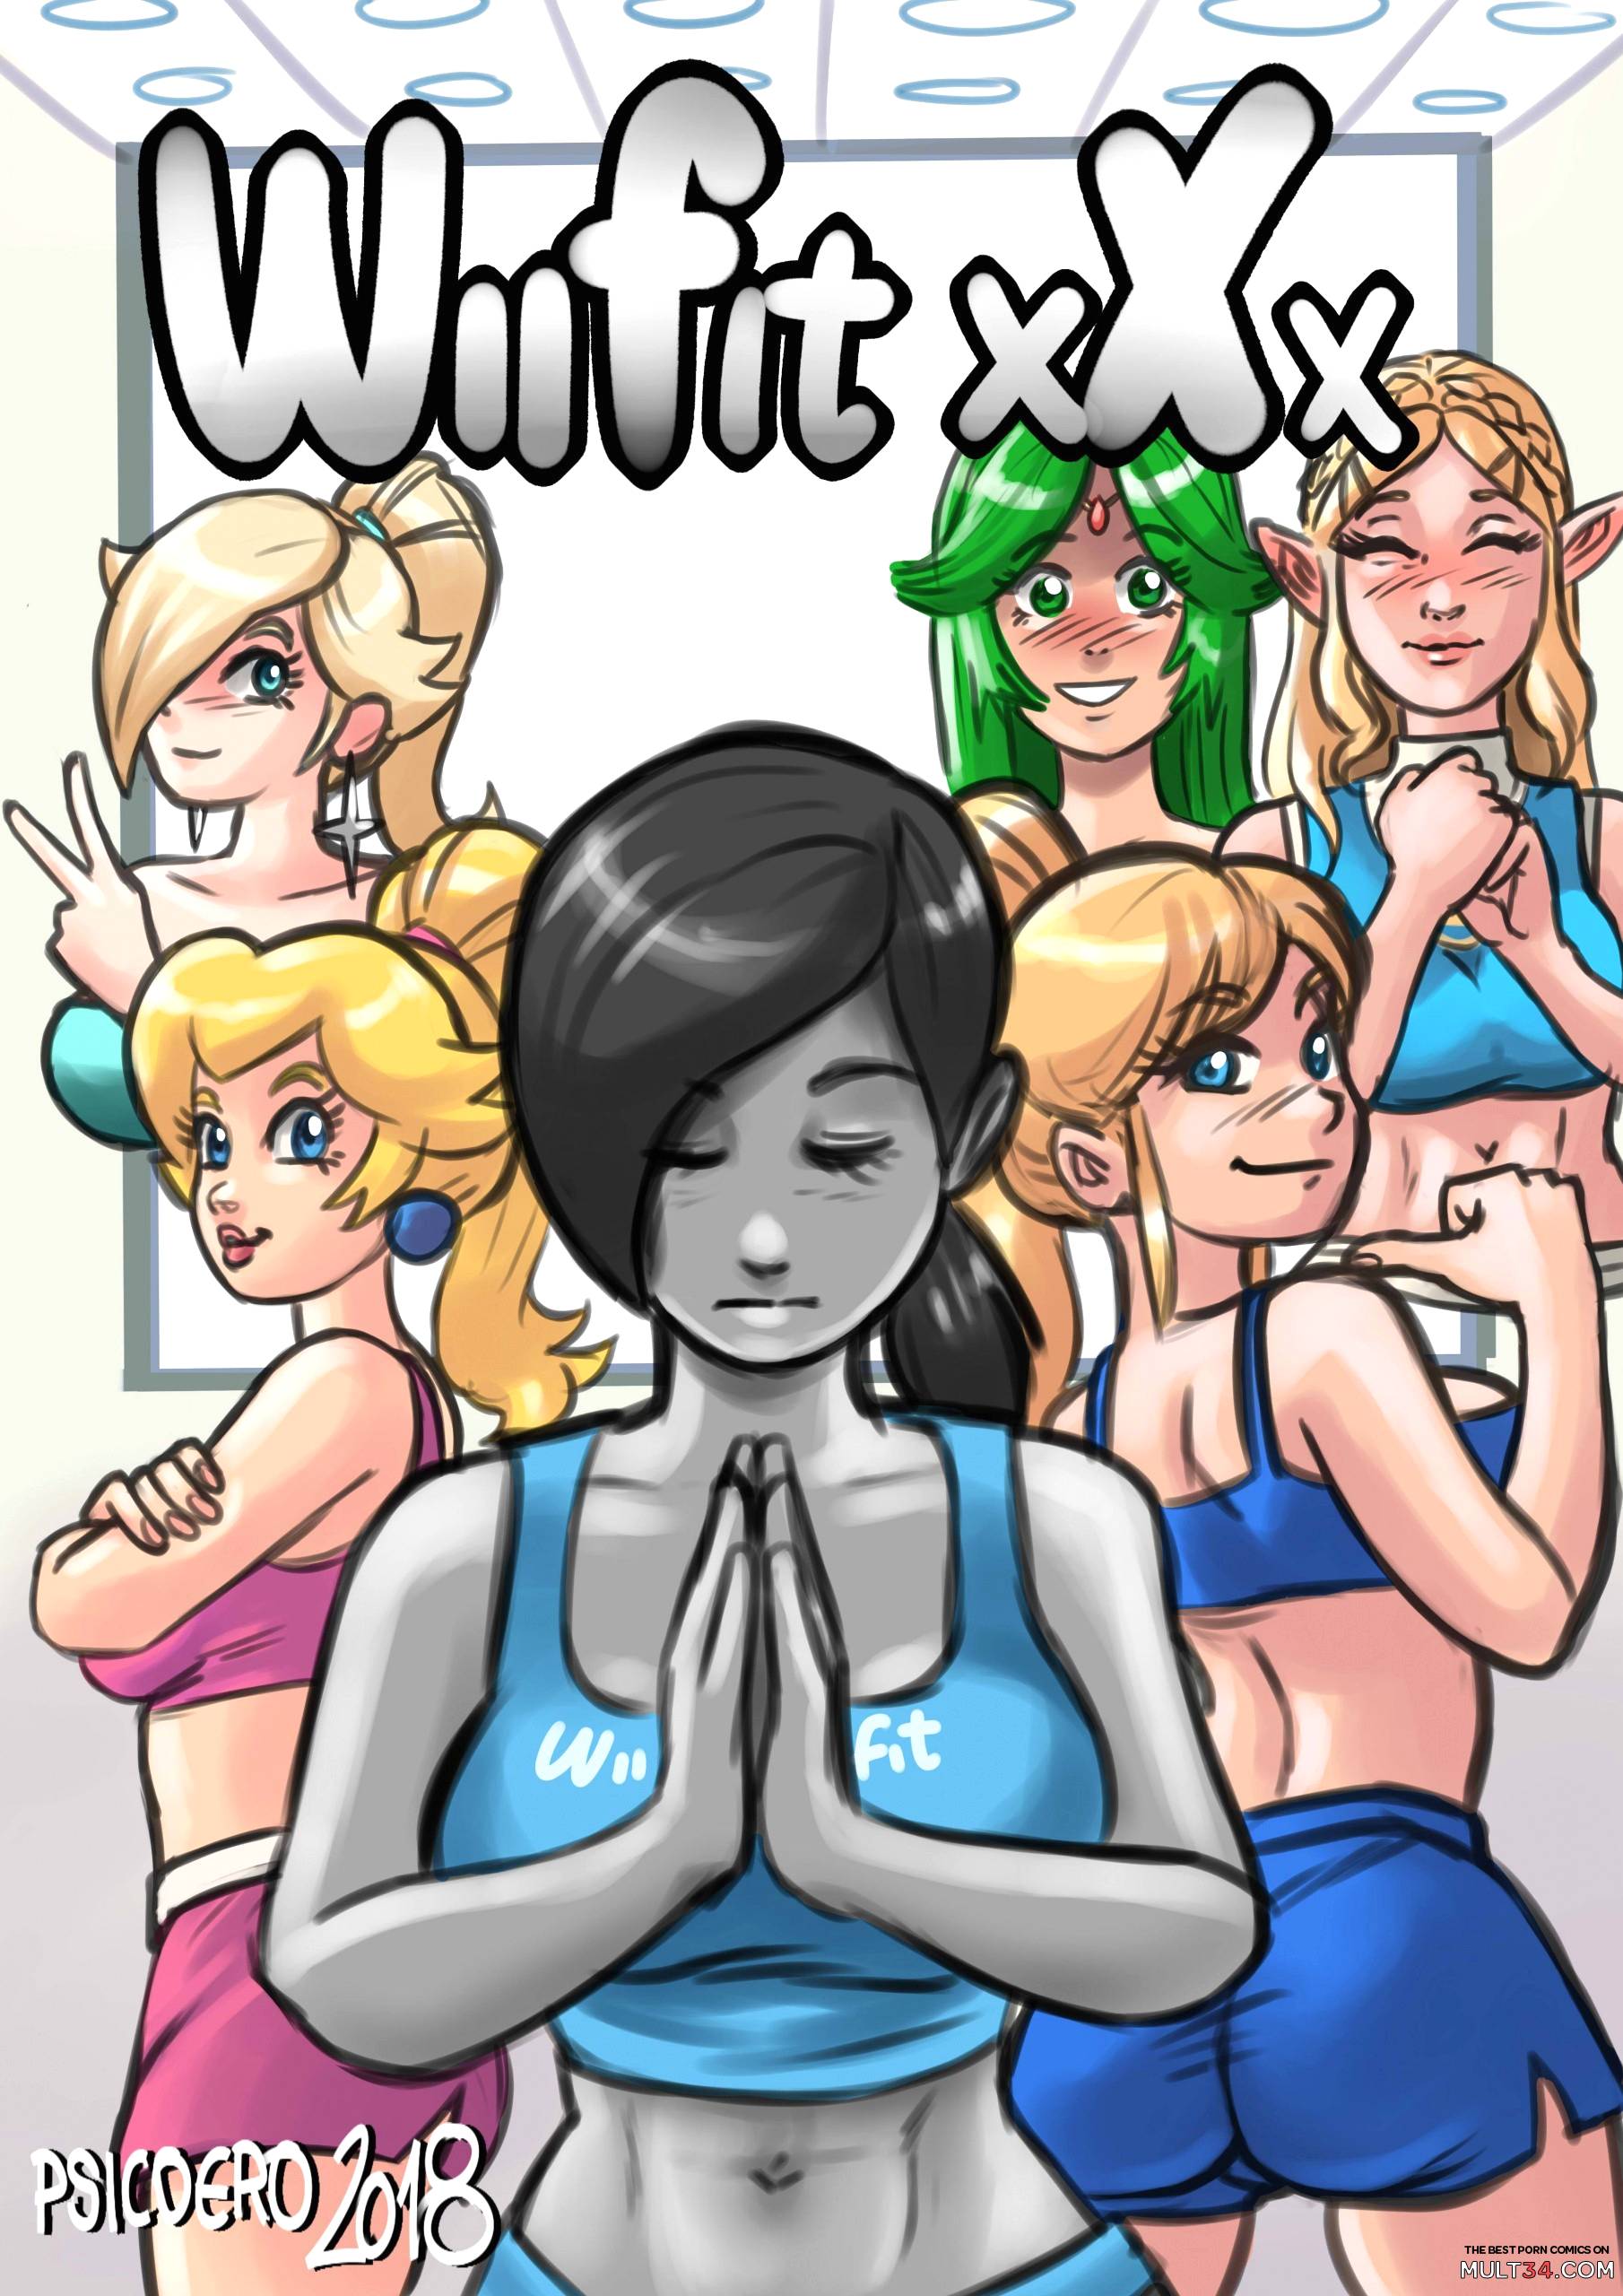 Wii fit xXx porn comic - the best cartoon porn comics, Rule 34 | MULT34